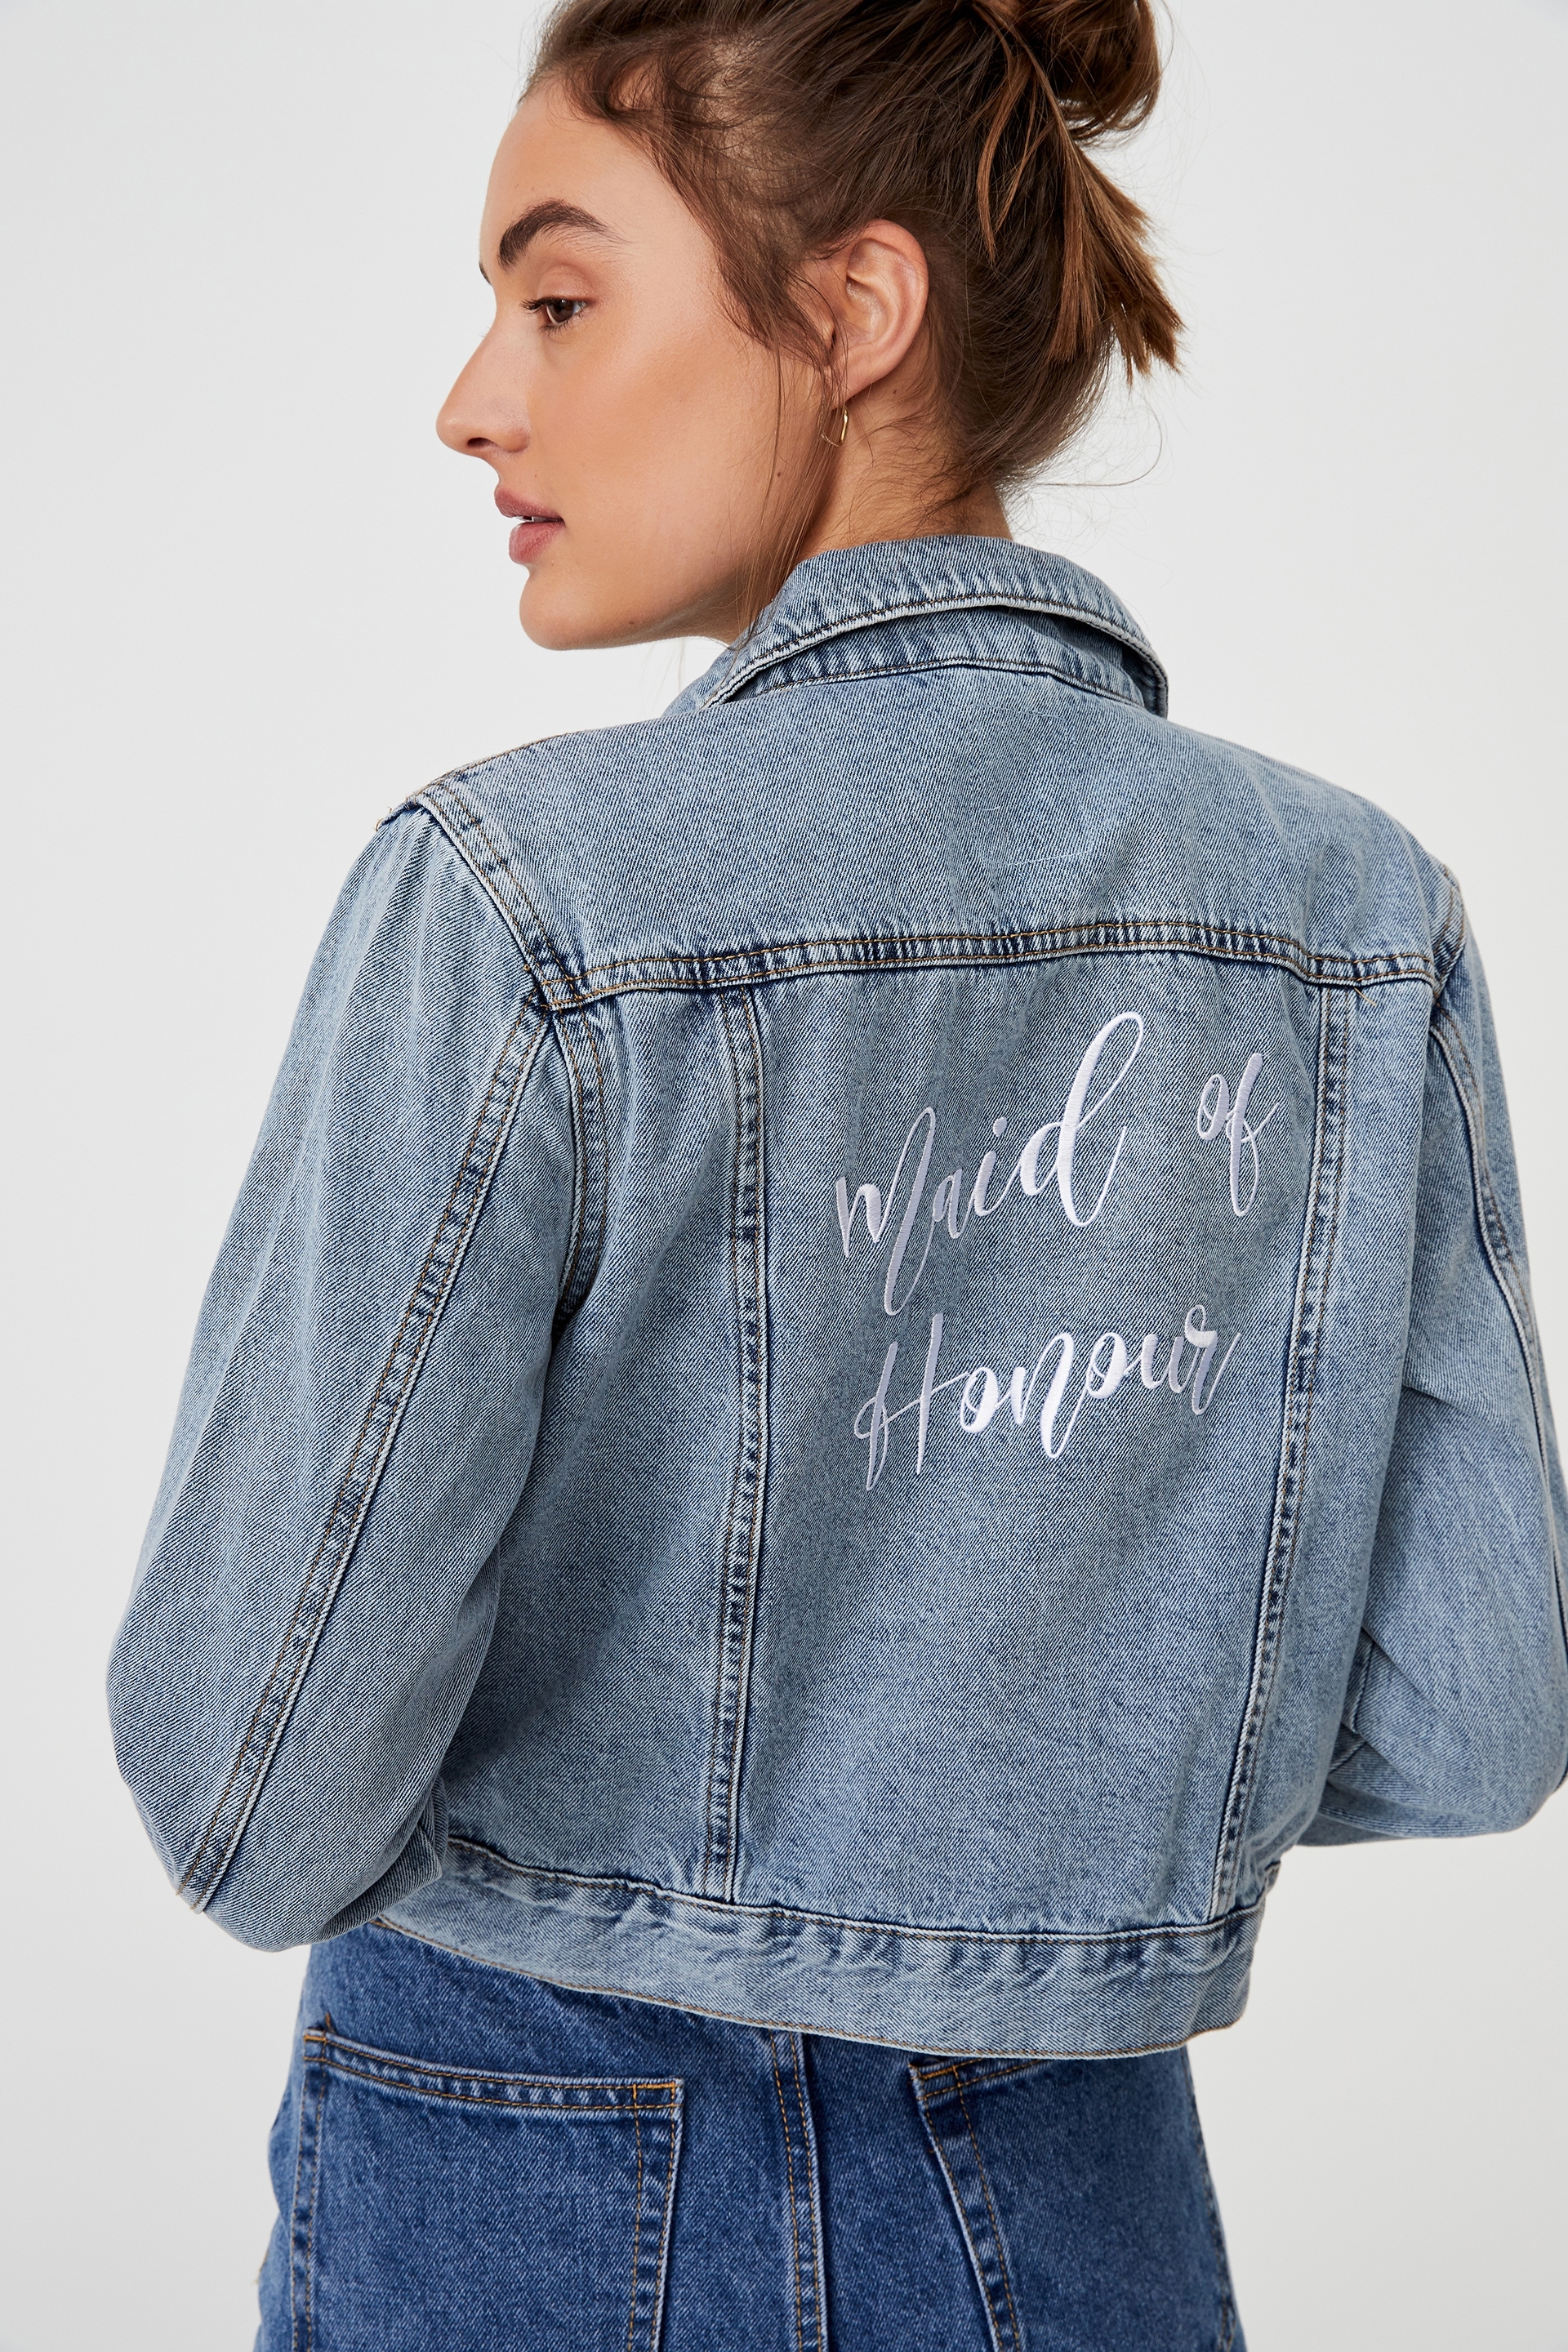 Cotton On Women - Girlfriend Denim Jacket Embroid Personalisation - Cabarita blue